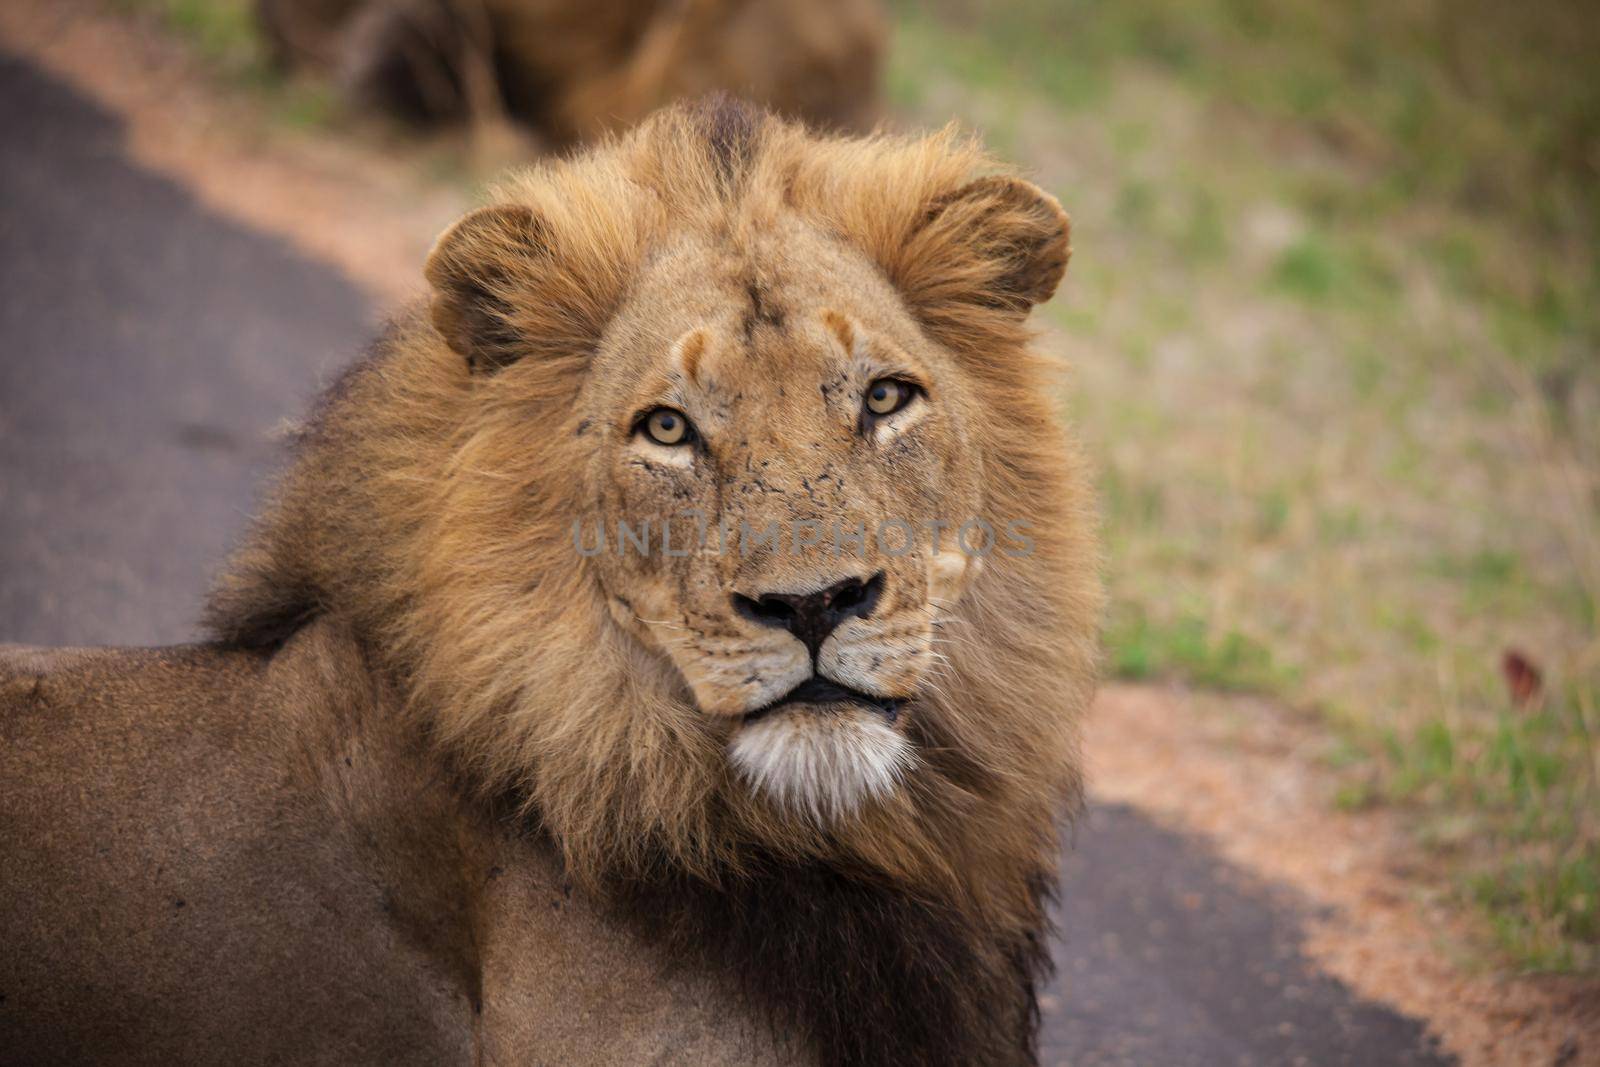 Single Male Lion 14888 by kobus_peche